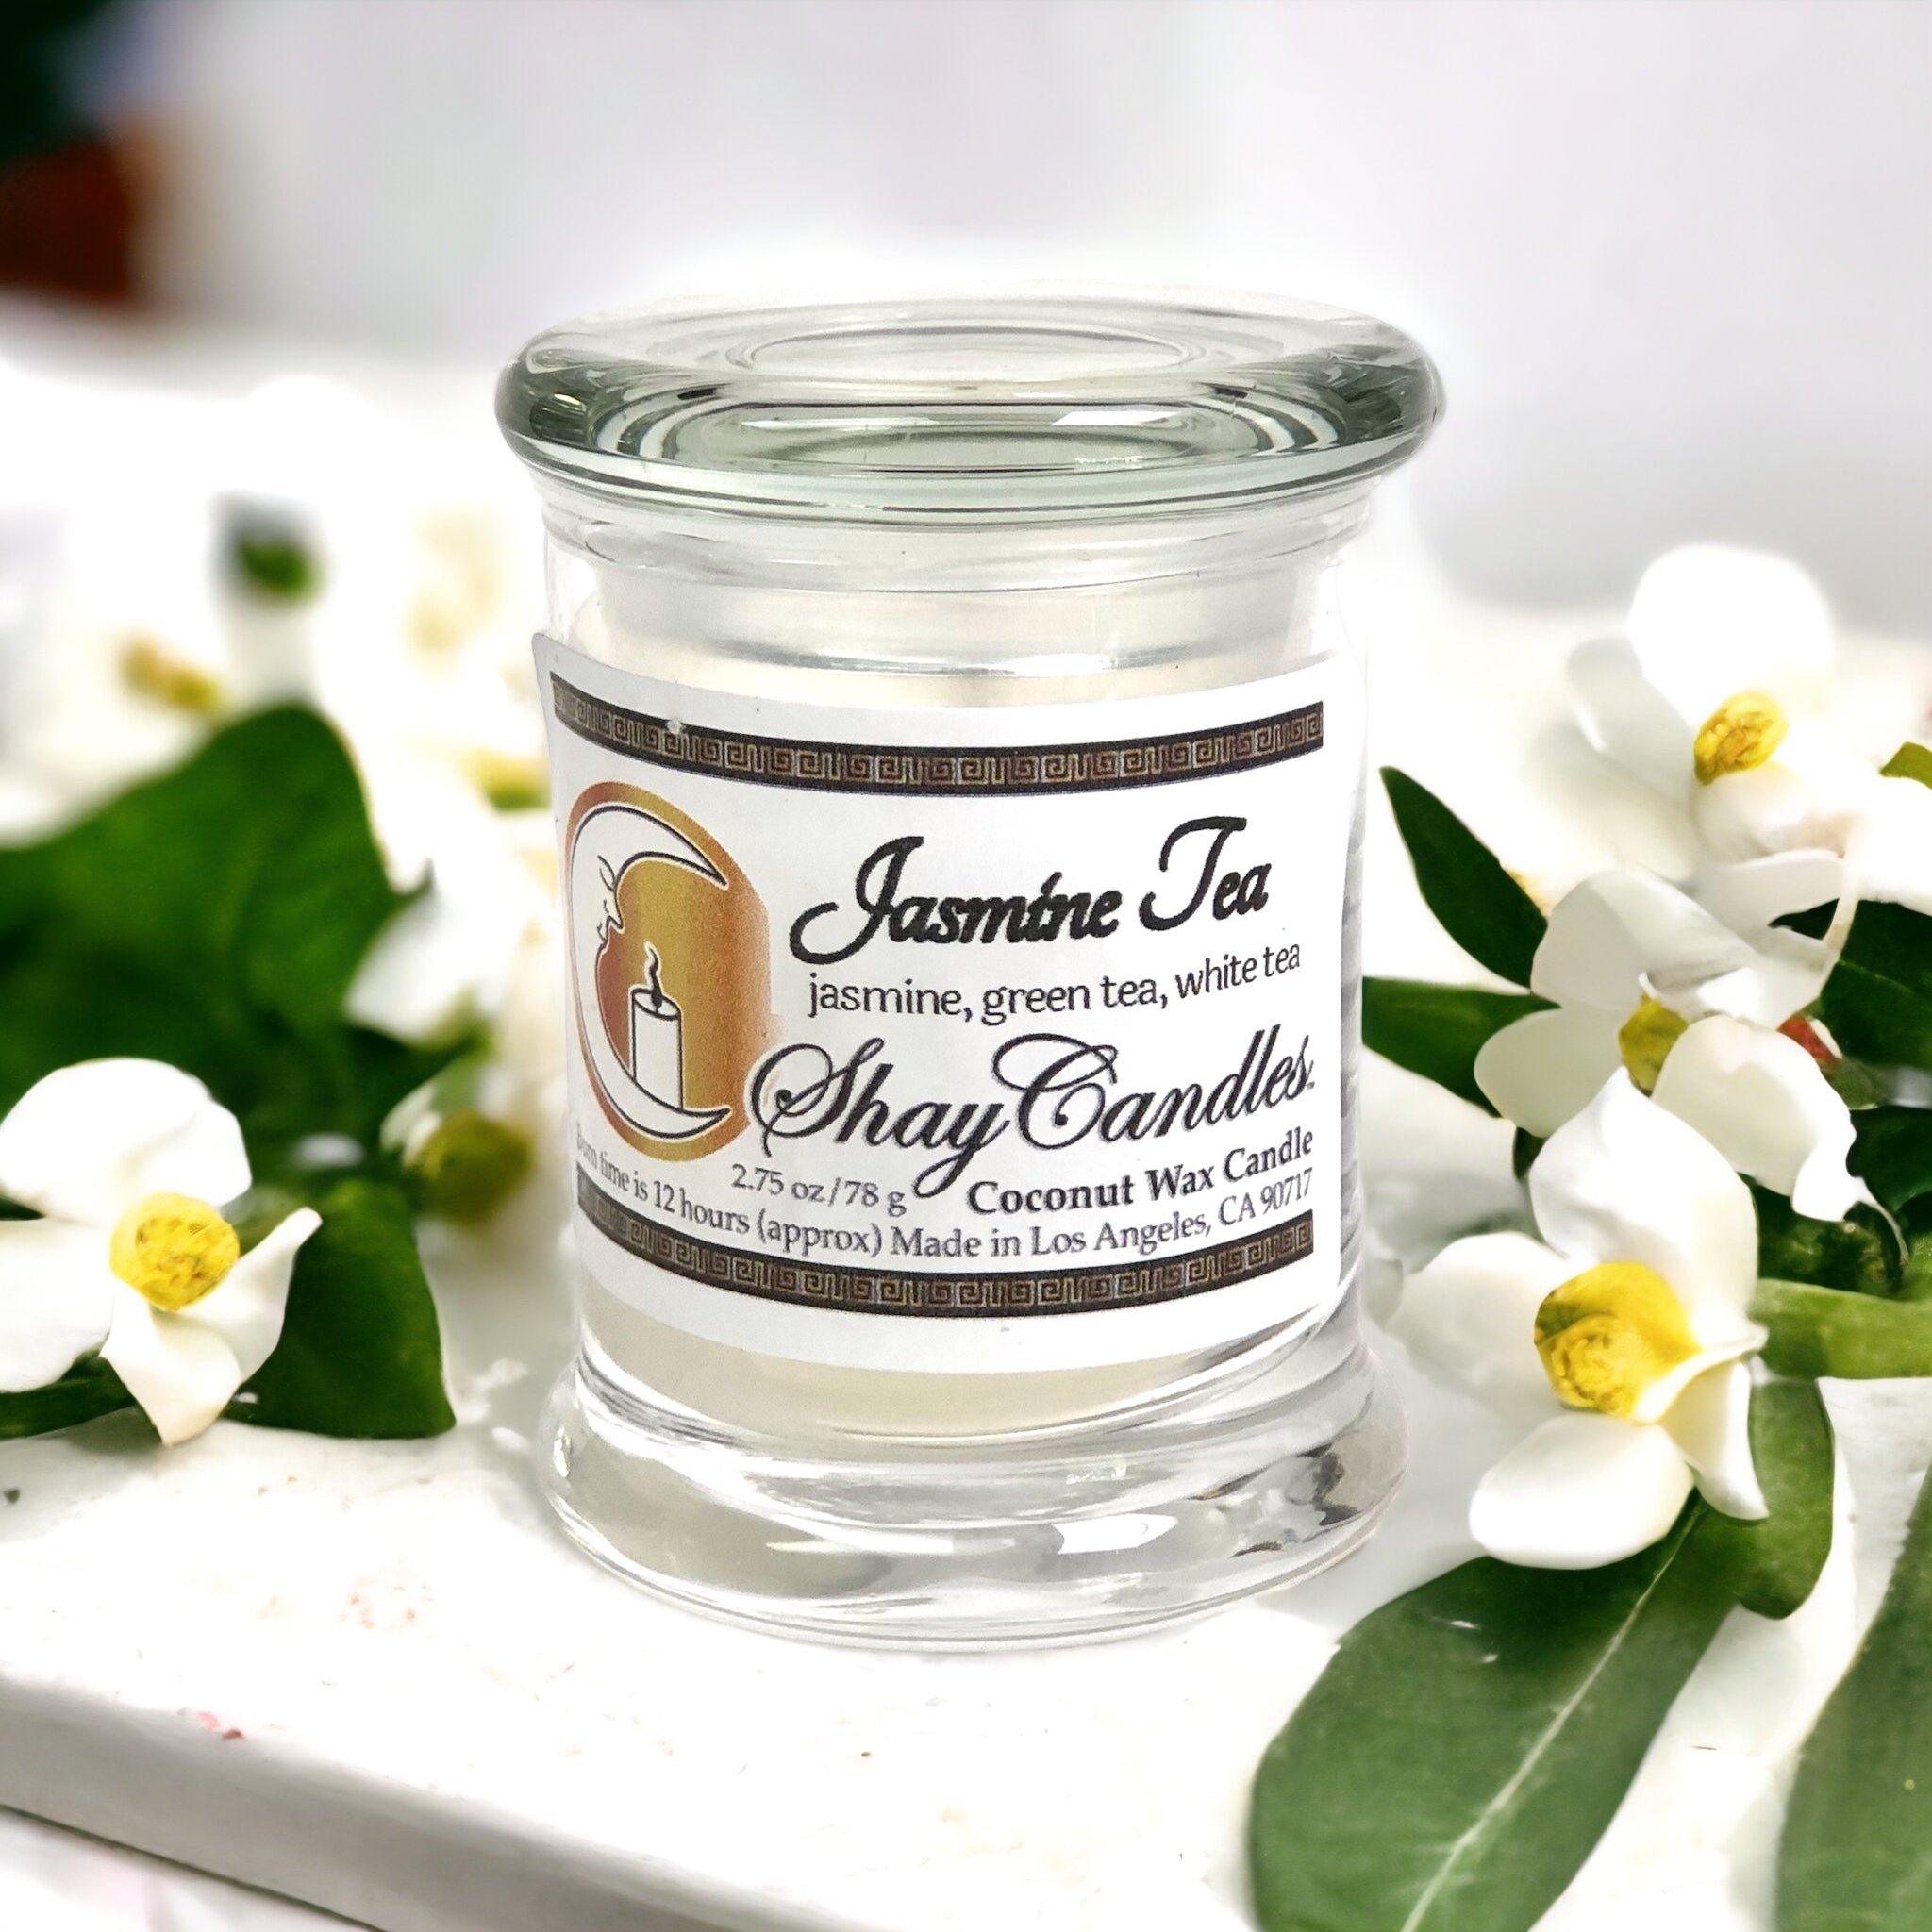 Jasmine and Green Tea scented 2.75 oz Candle, ”JASMINE TEA”